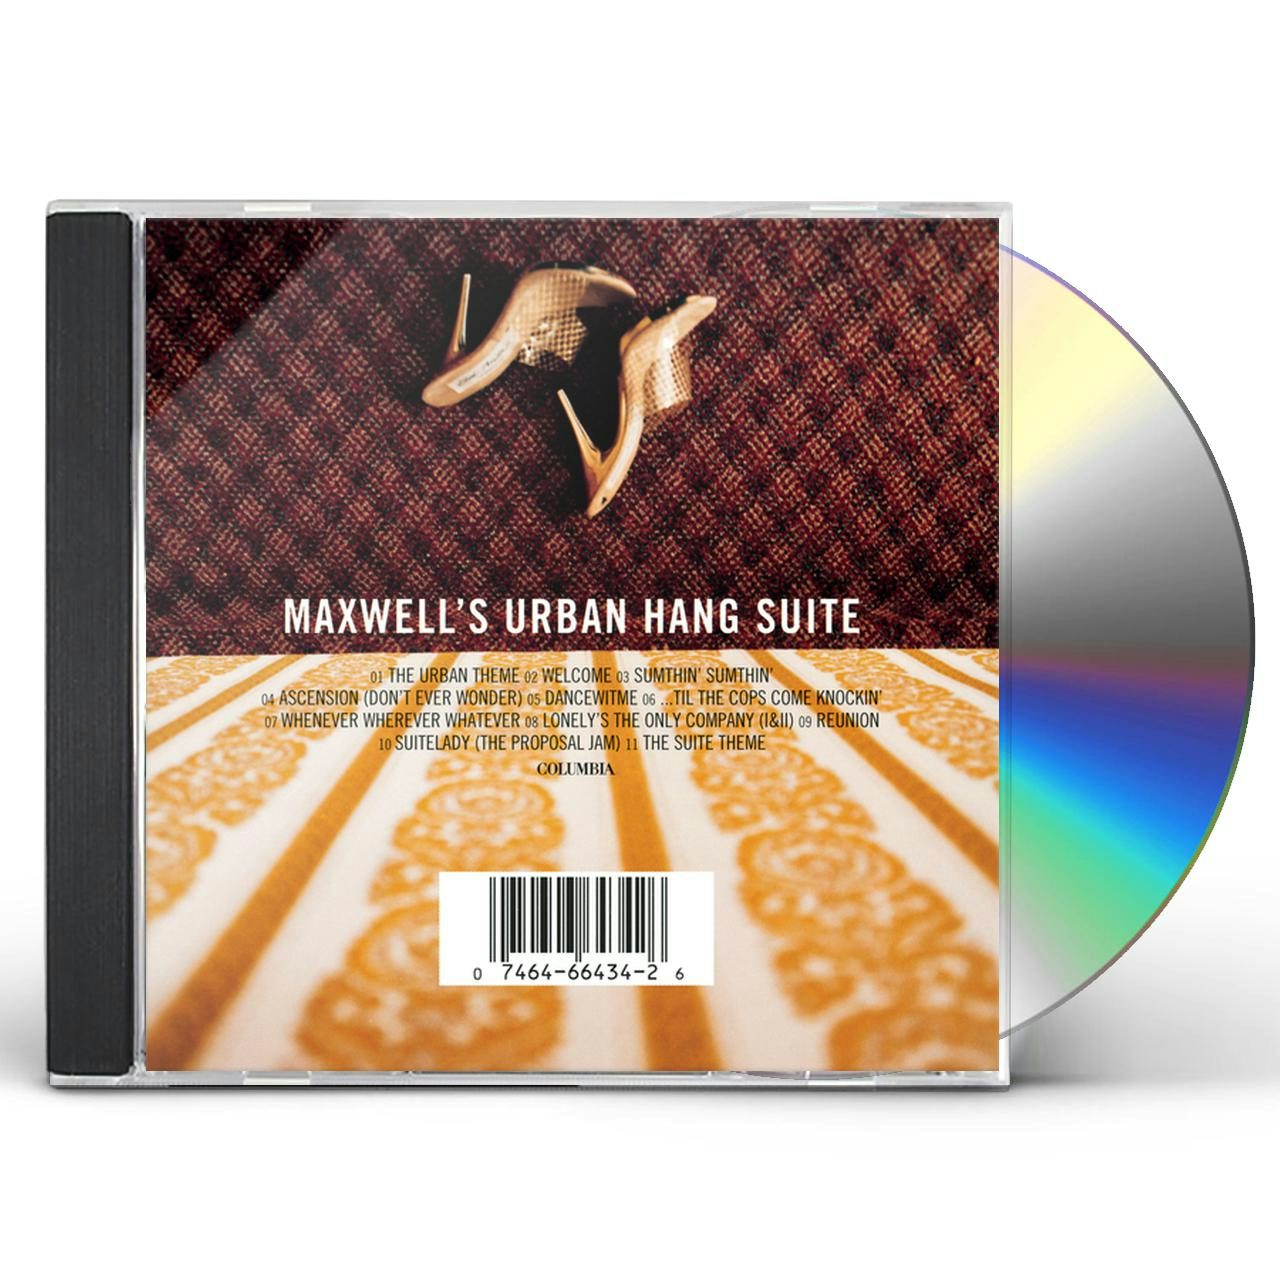 s urban hang suite cd - Maxwell